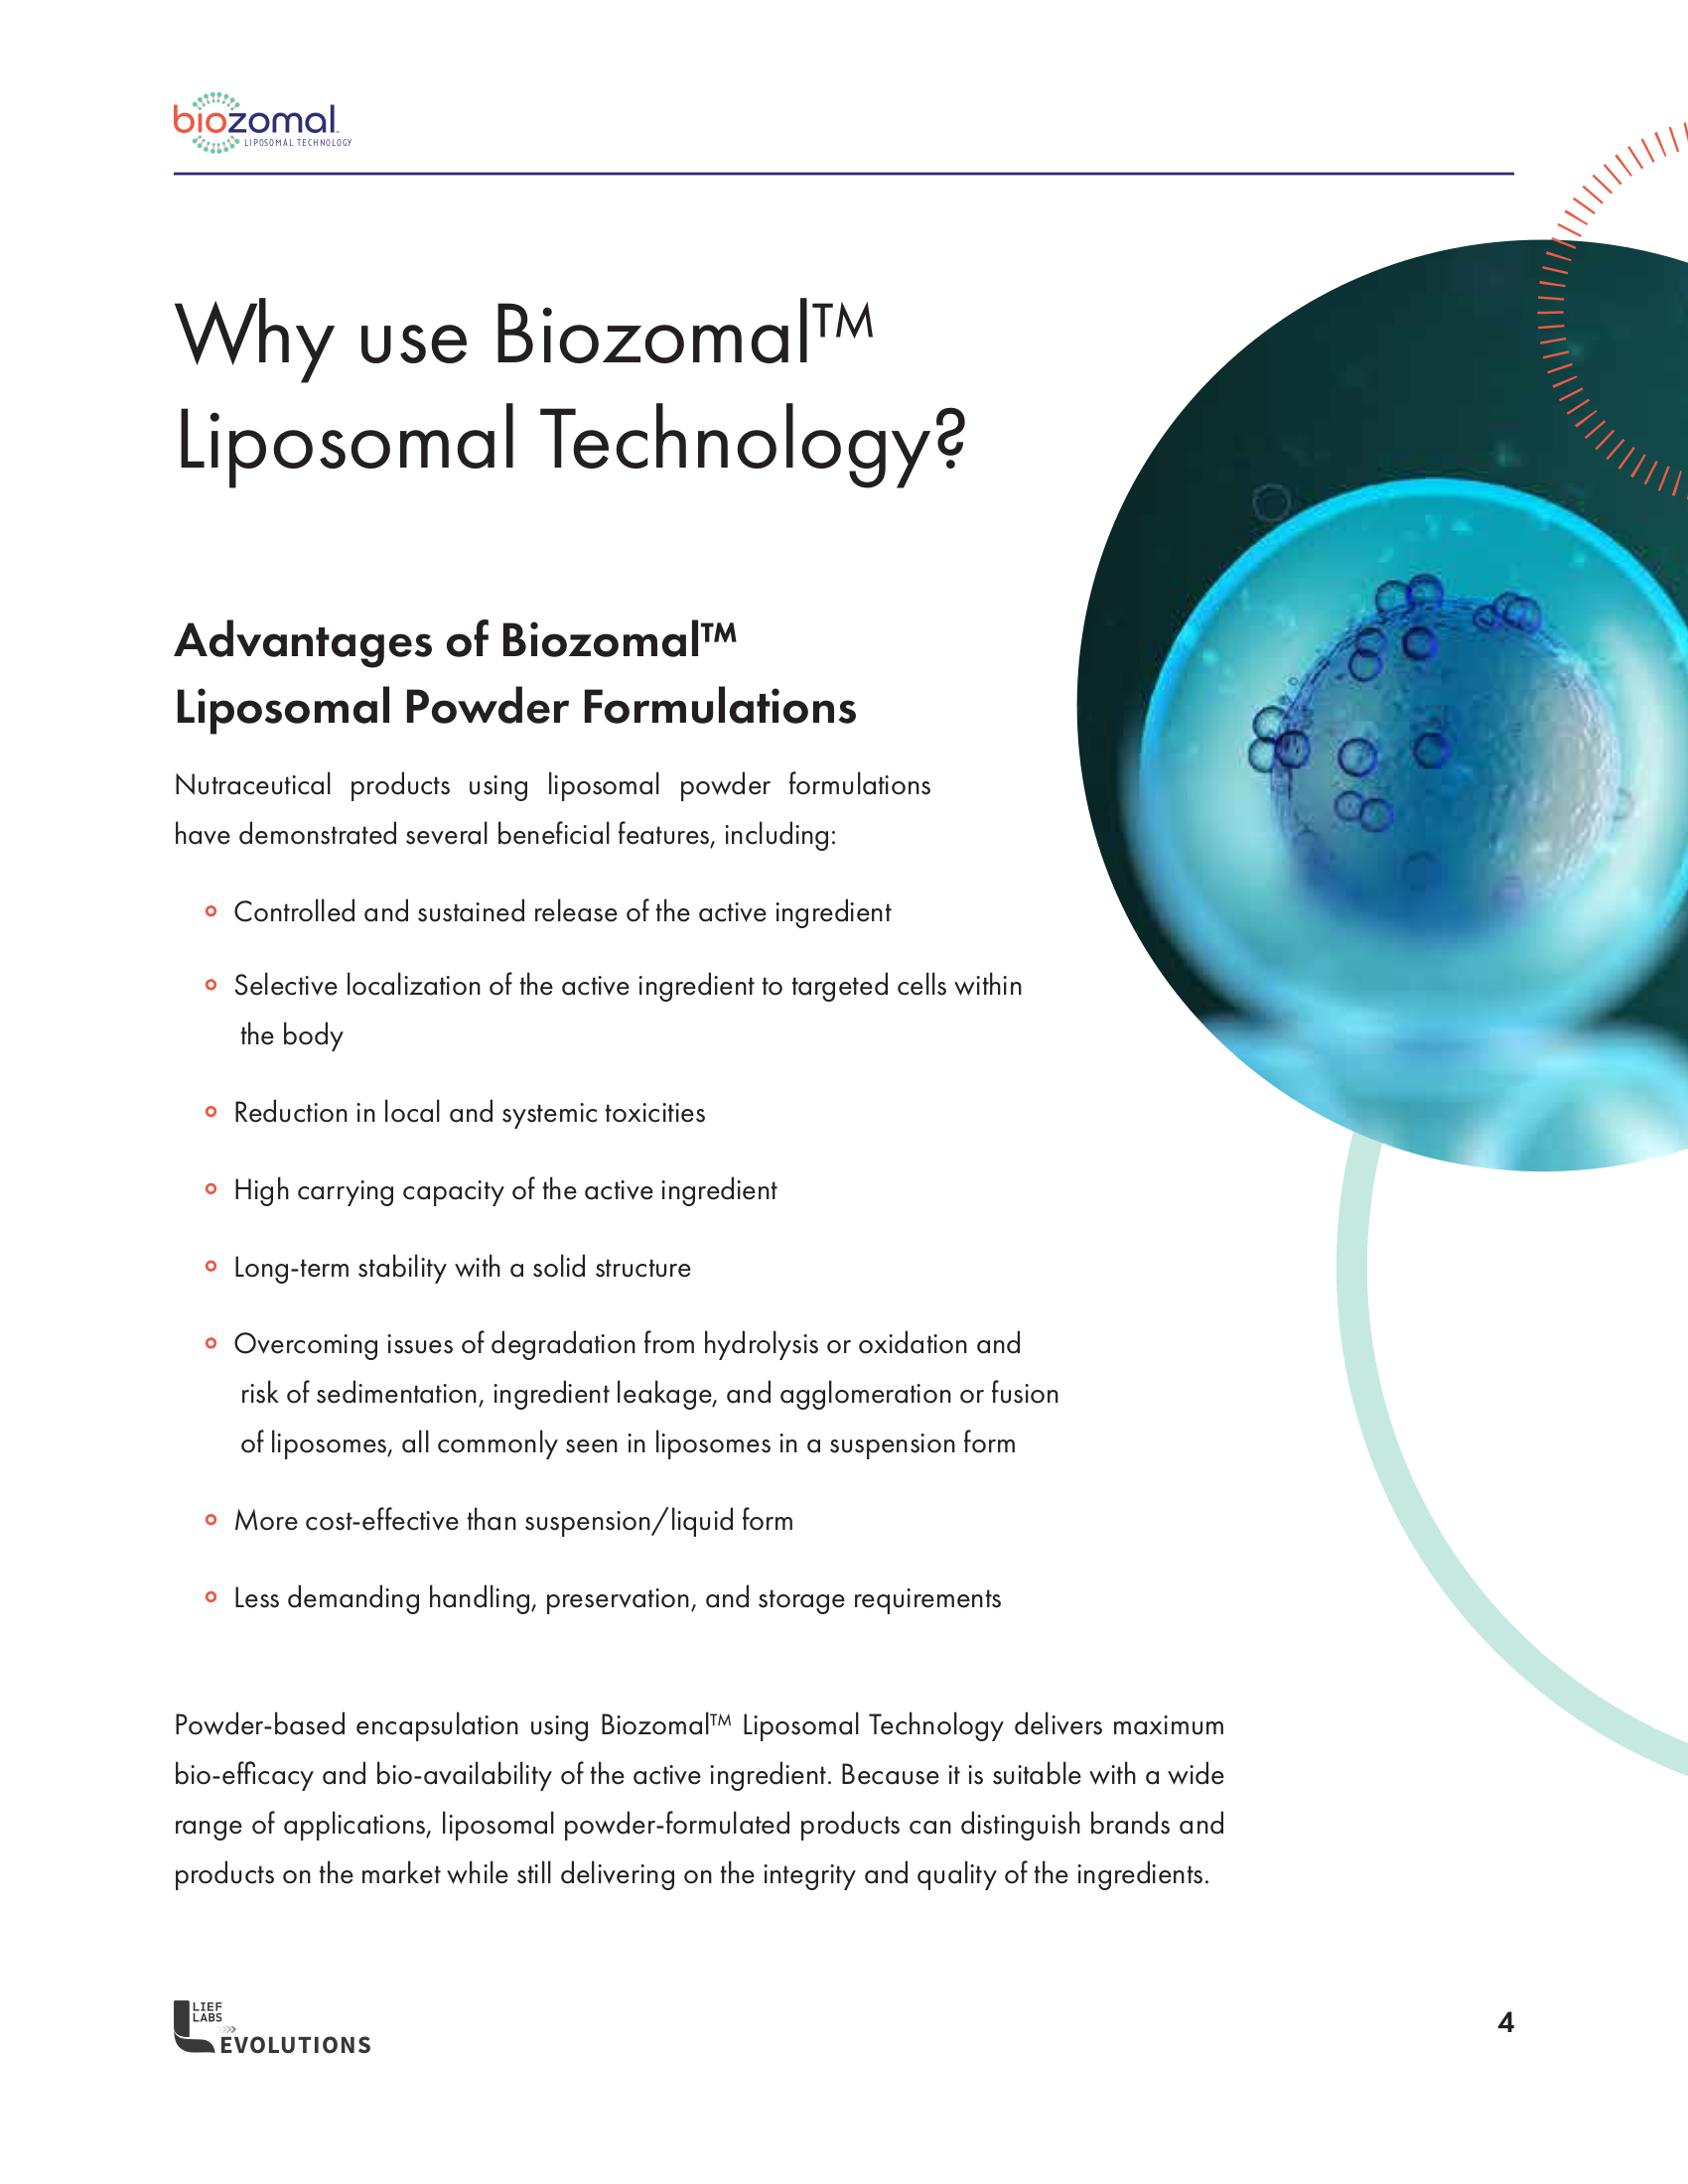 Biozomal Liposomal Technology Benefits